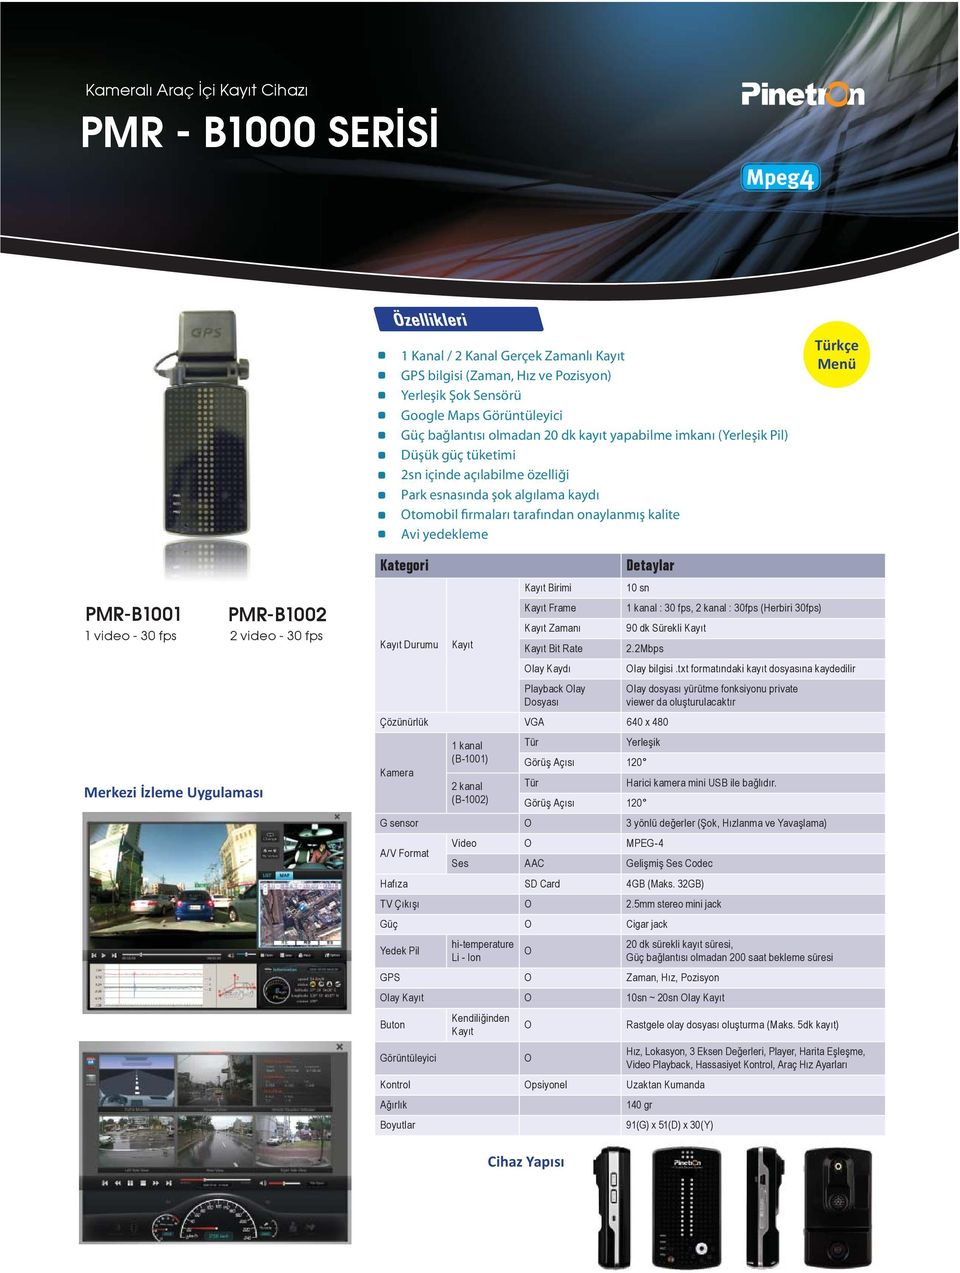 Türkçe Menü PMR-B1001 PMR-B1002 1 video - 30 fps 2 video - 30 fps Merkezi İzleme Uygulaması Kategori Detaylar Kayıt Birimi 10 sn Kayıt Frame 1 kanal : 30 fps, 2 kanal : 30fps (Herbiri 30fps) Kayıt